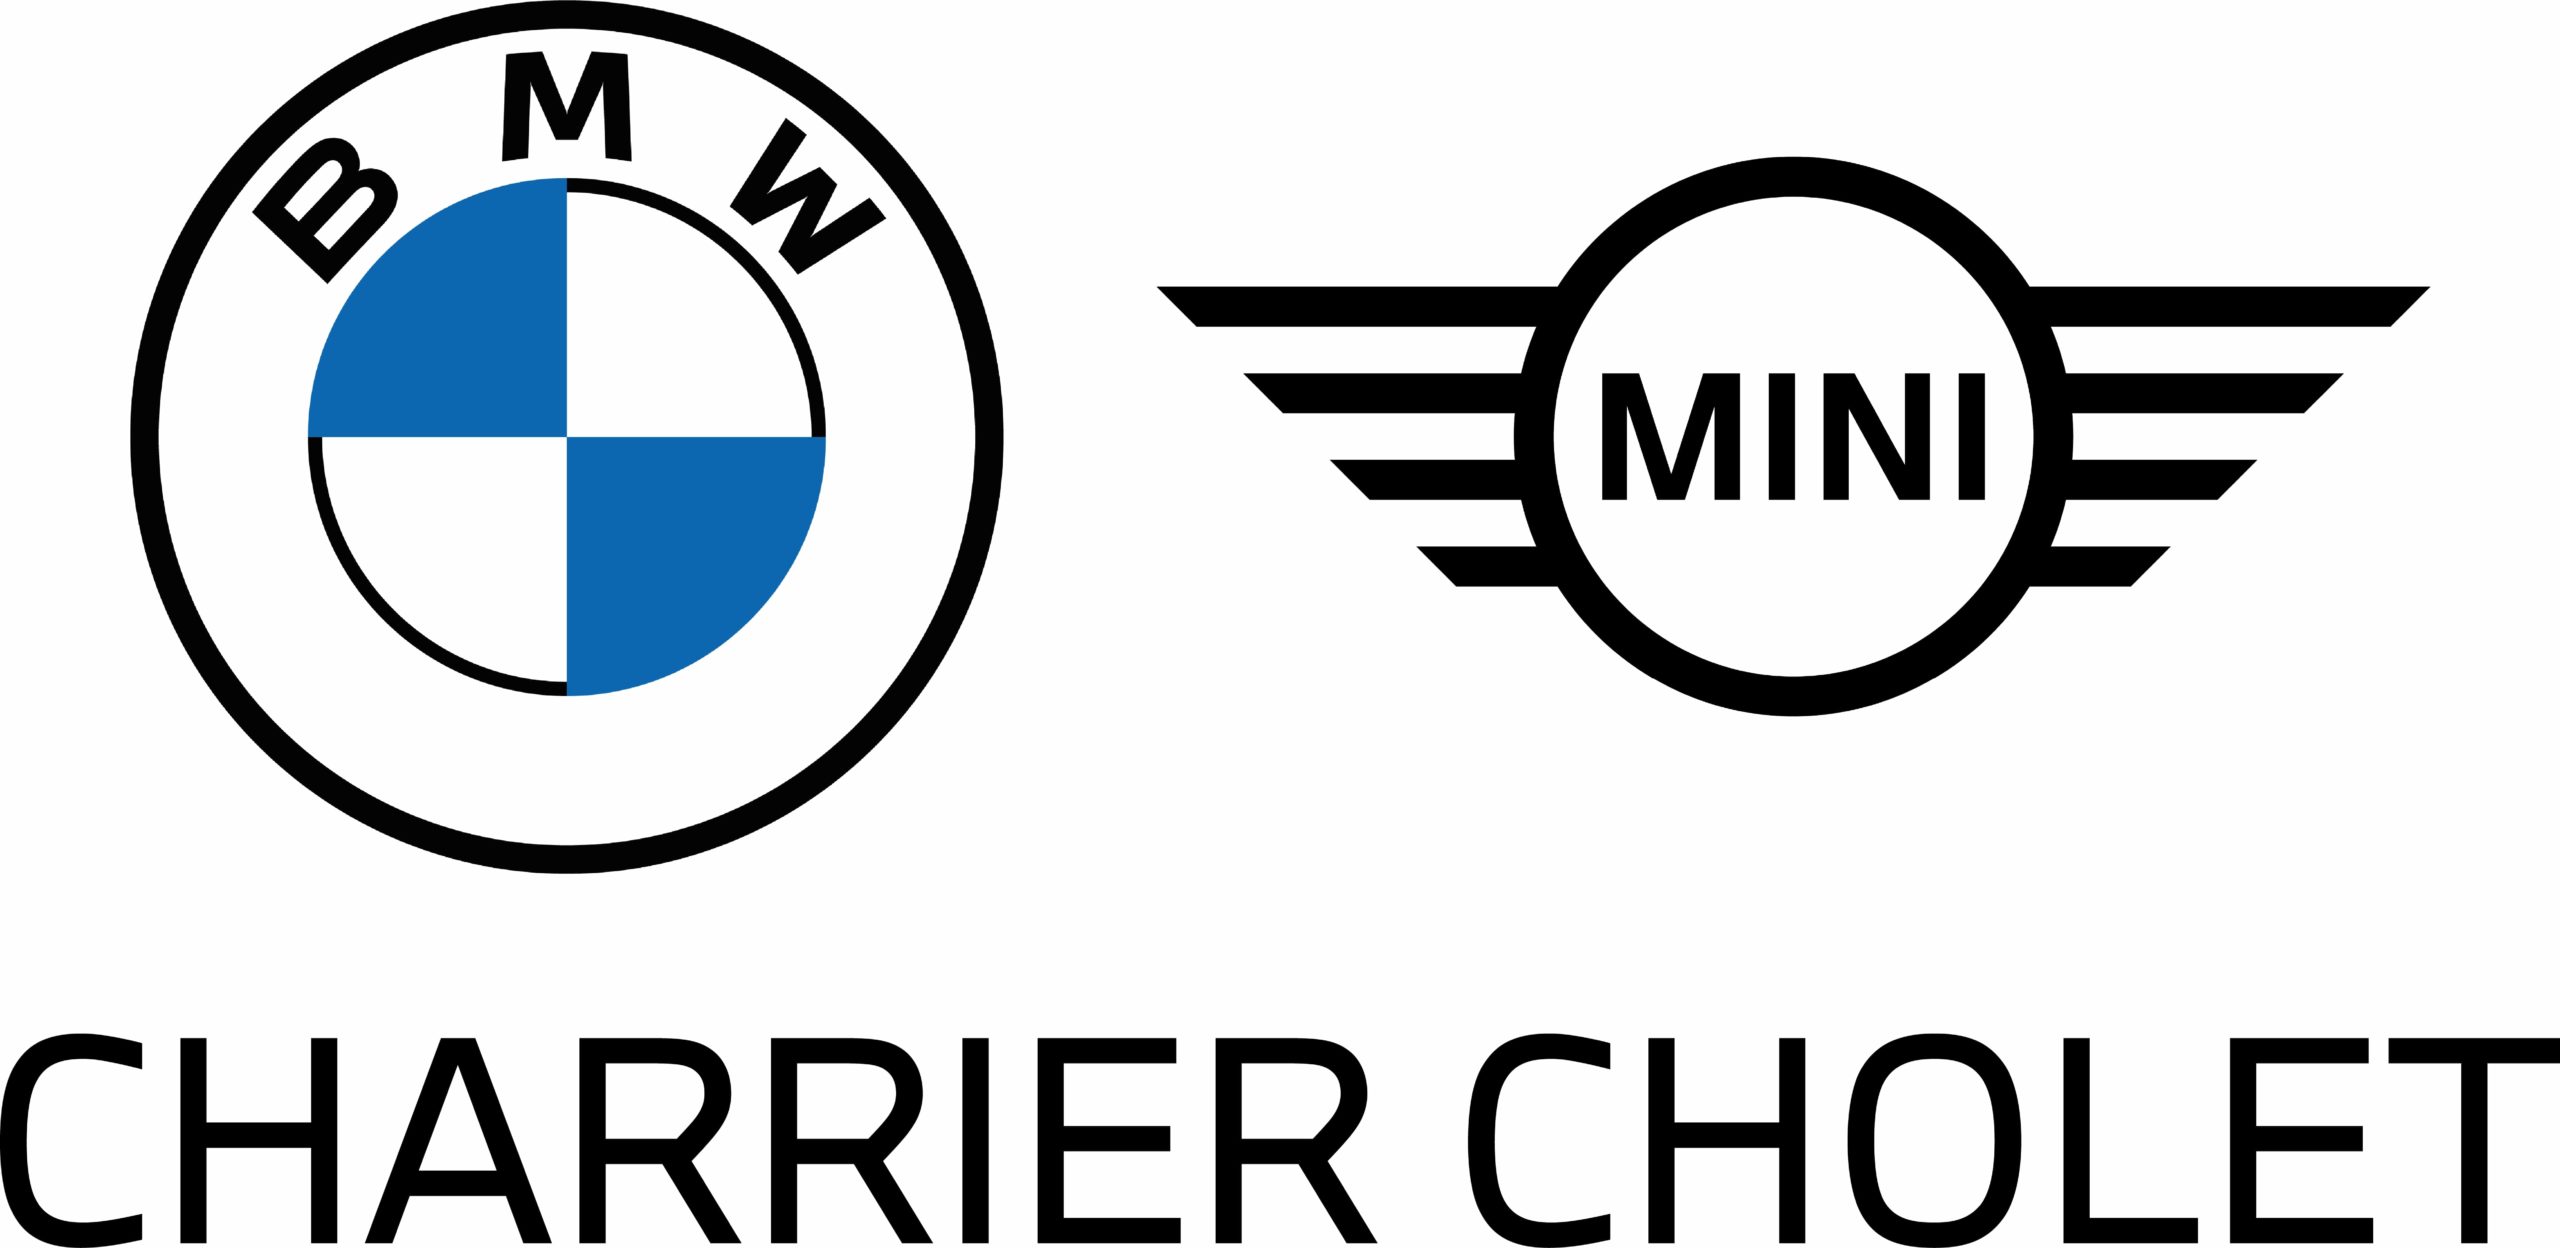 BMW MINI CHARRIER CHOLET